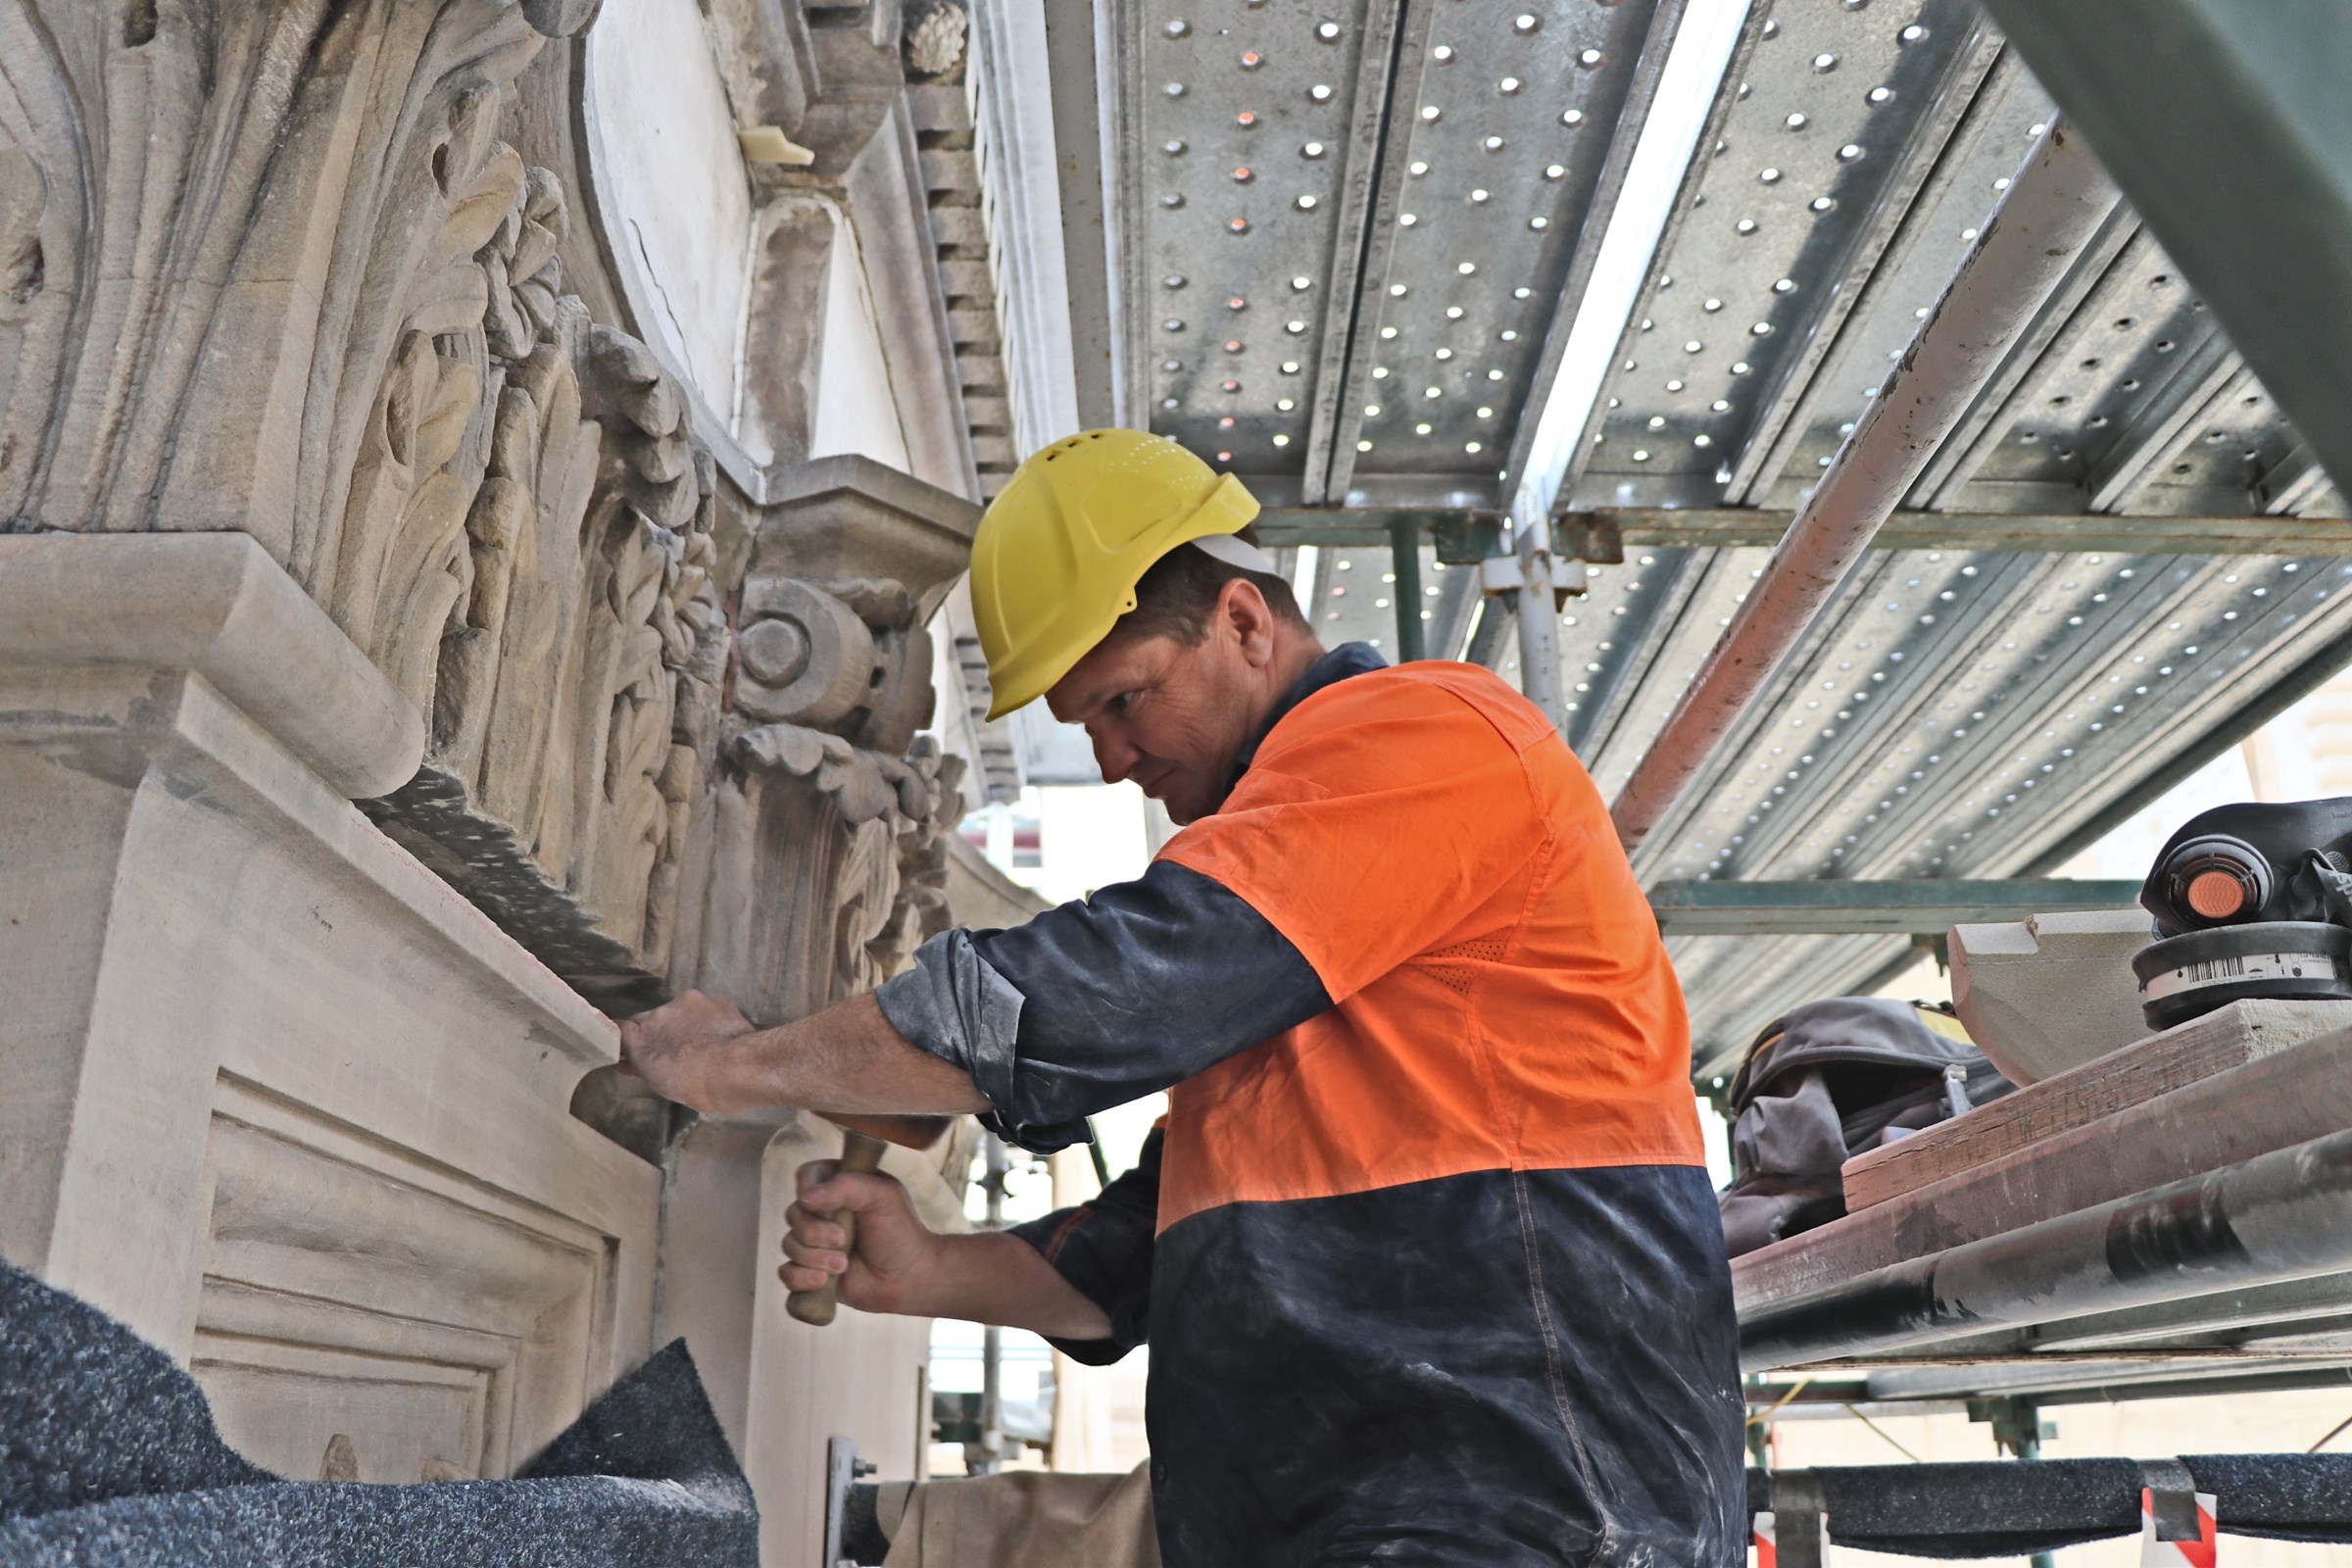 Glenn Torbet, stonemason, stands amongst scaffolding as he works on the stonework of Parliament House.